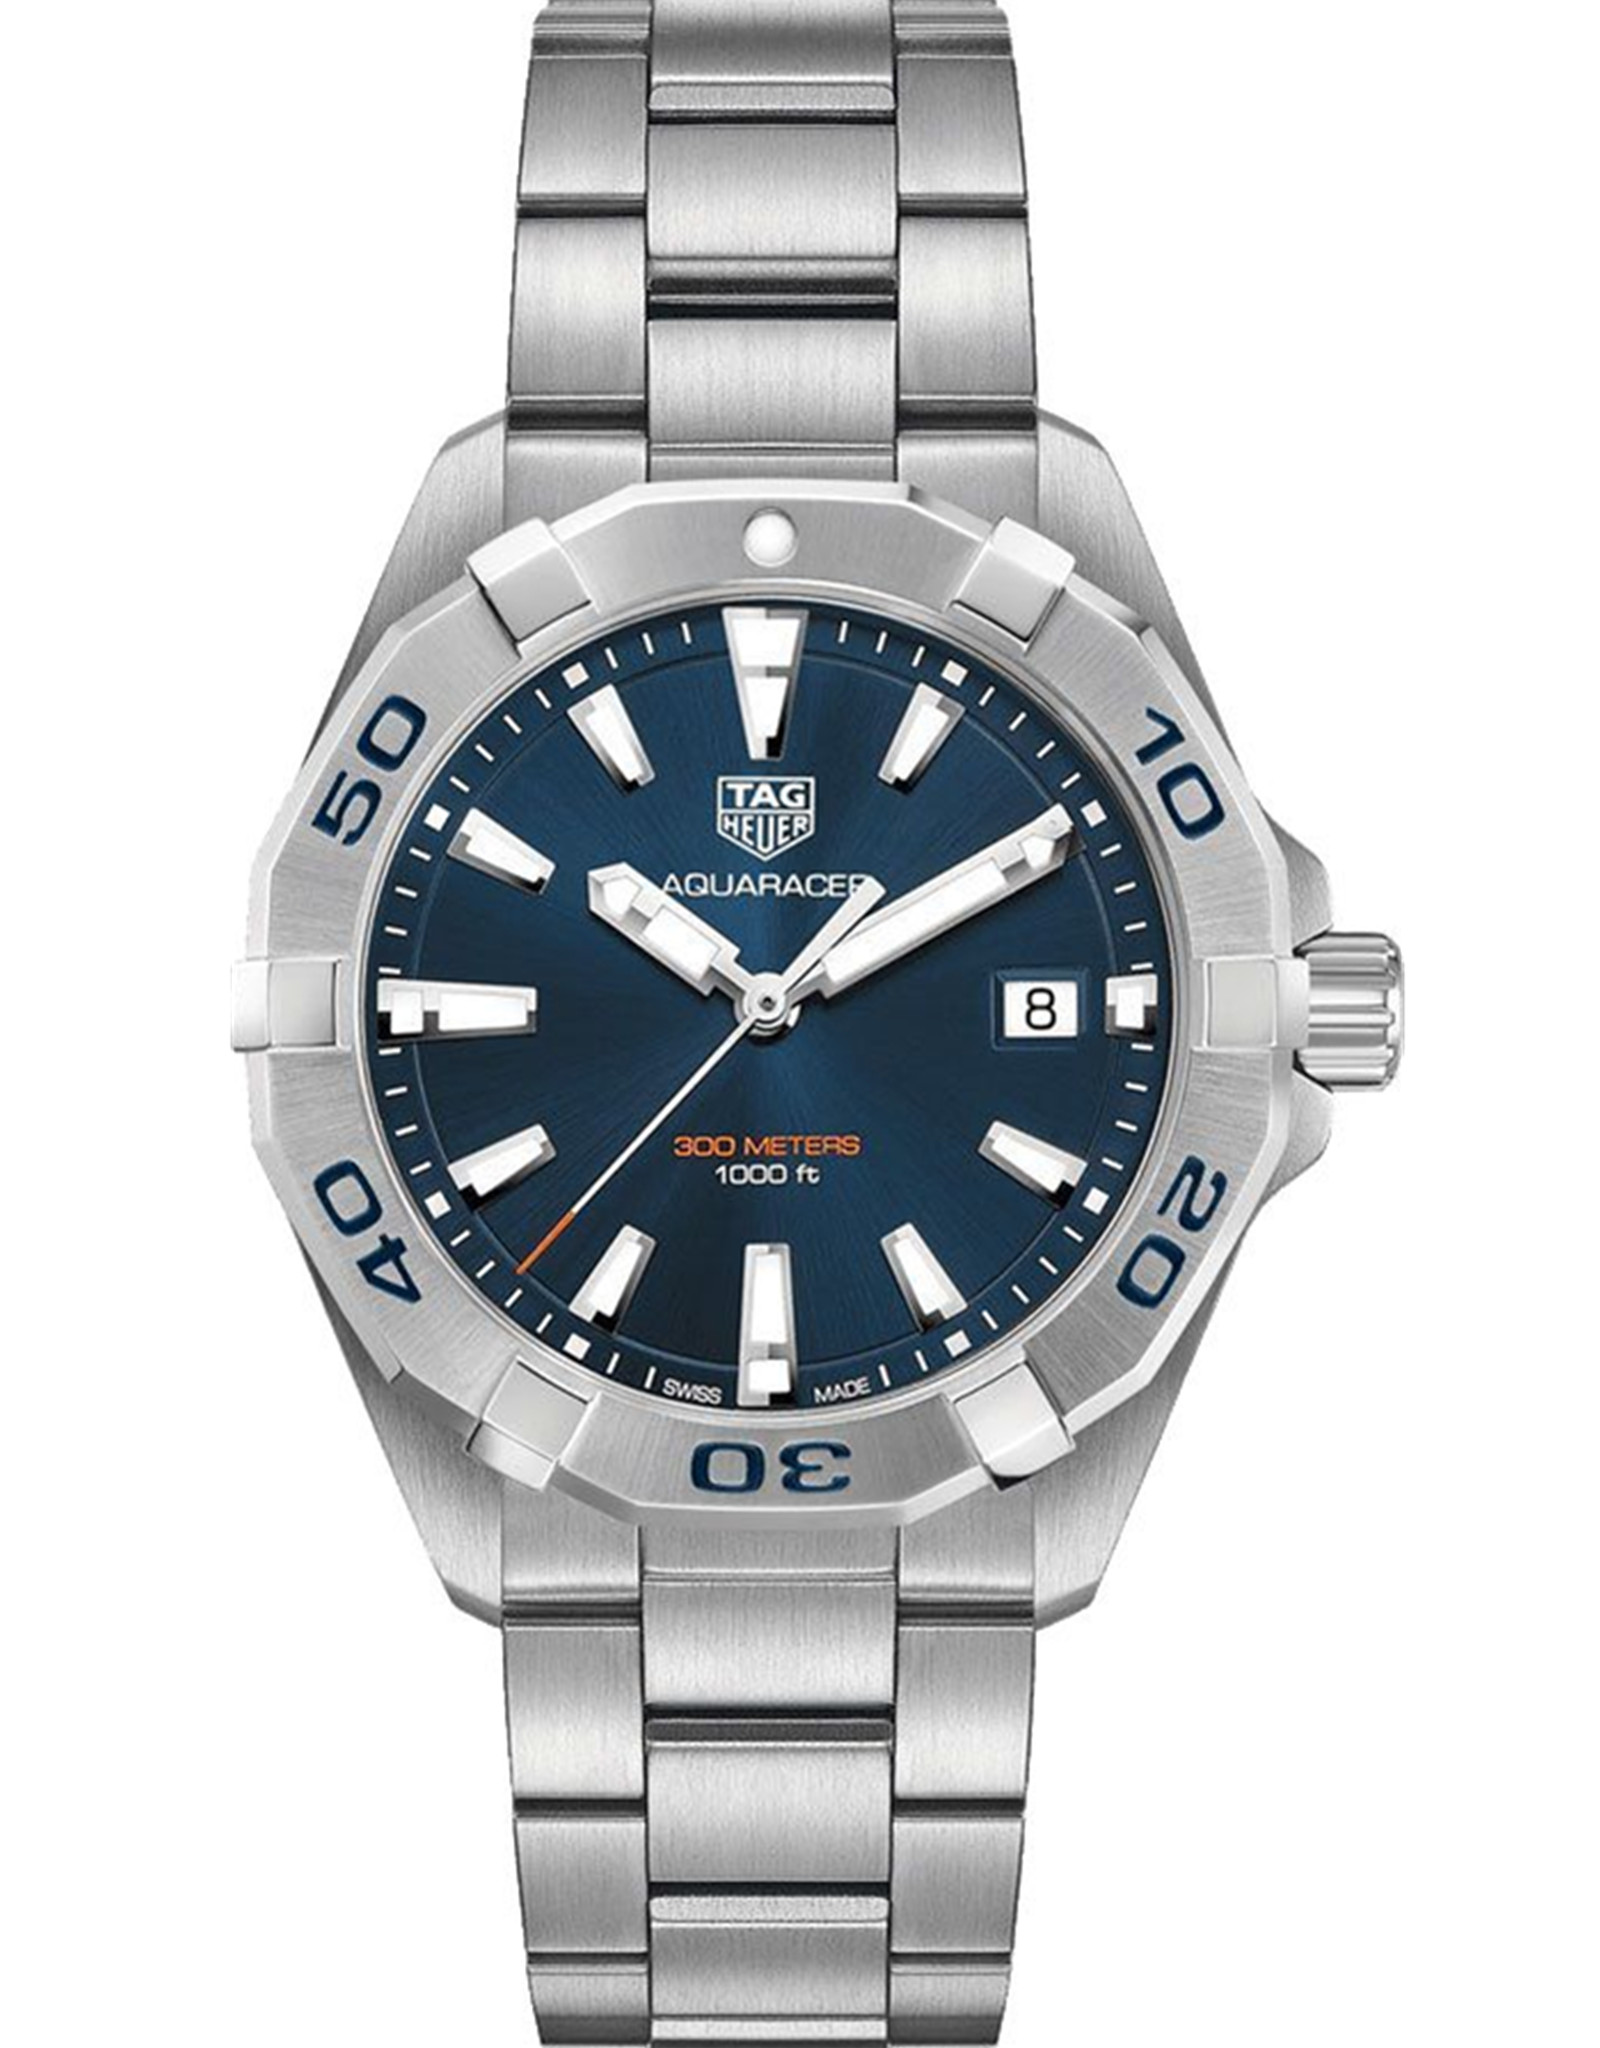 Replica Tag Heuer Aquaracer Brushed Blue Dial Men's Diving Watch Sale